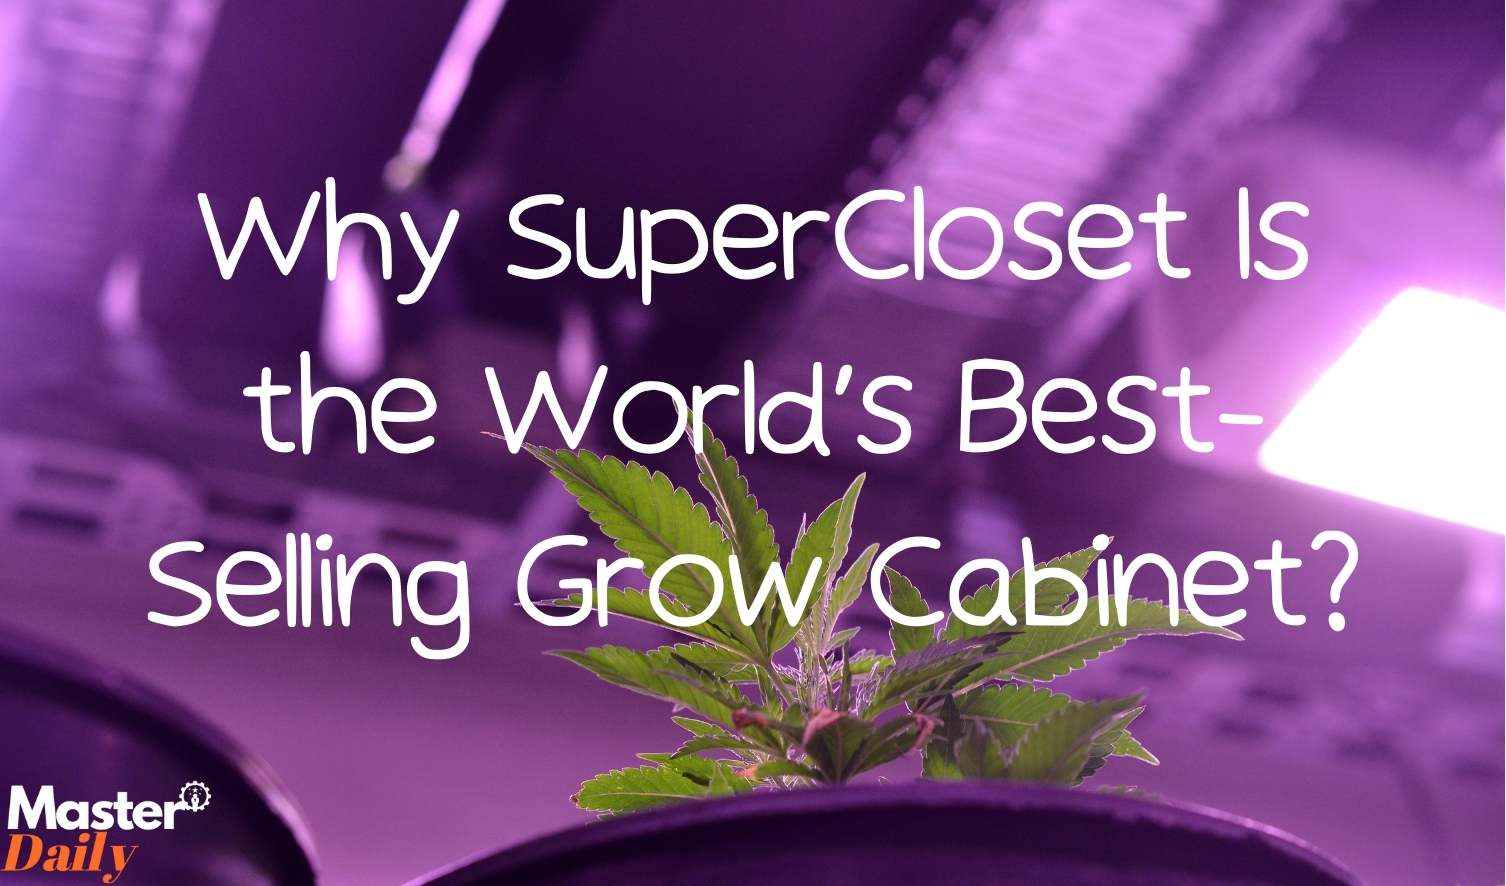 SuperCloset Grow Cabinet